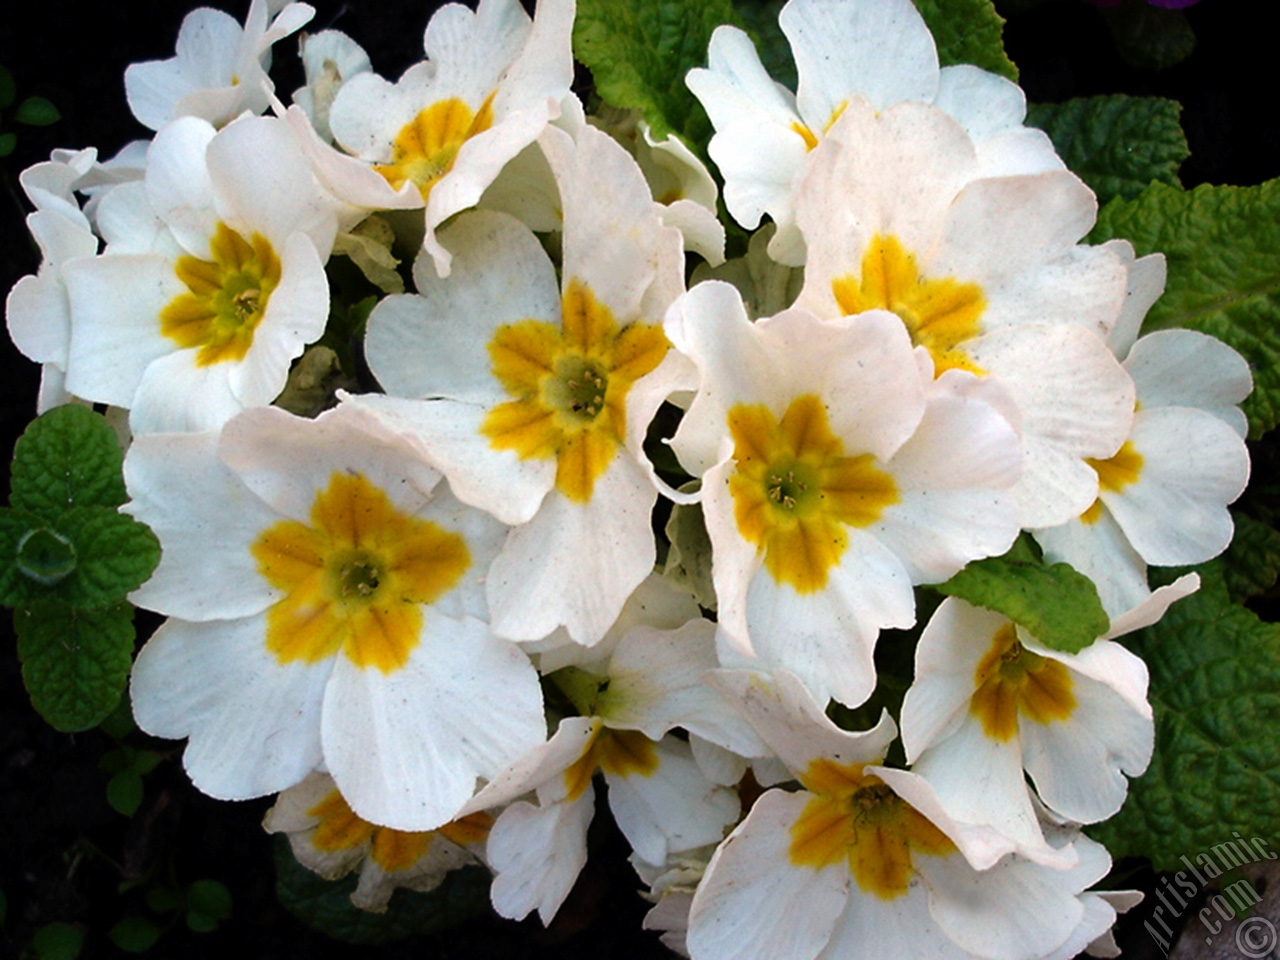 A primrose flower photo.
